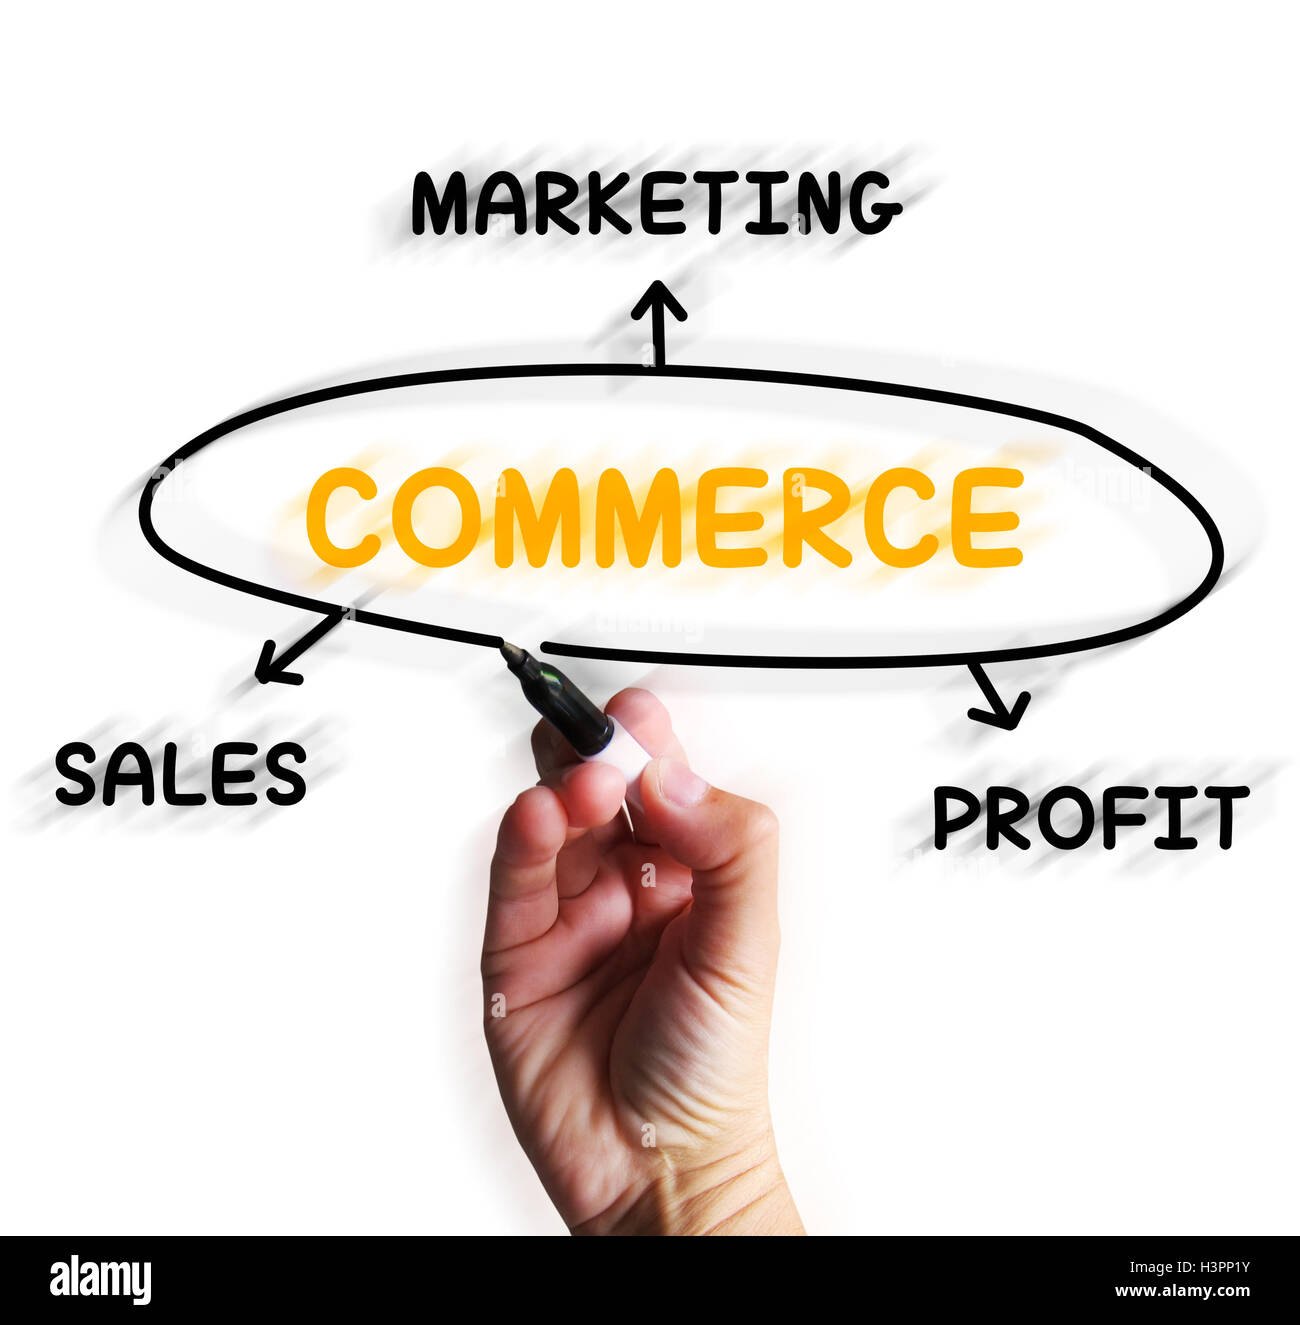 Commerce Diagram Displays Marketing Sales And Profit Stock Photo